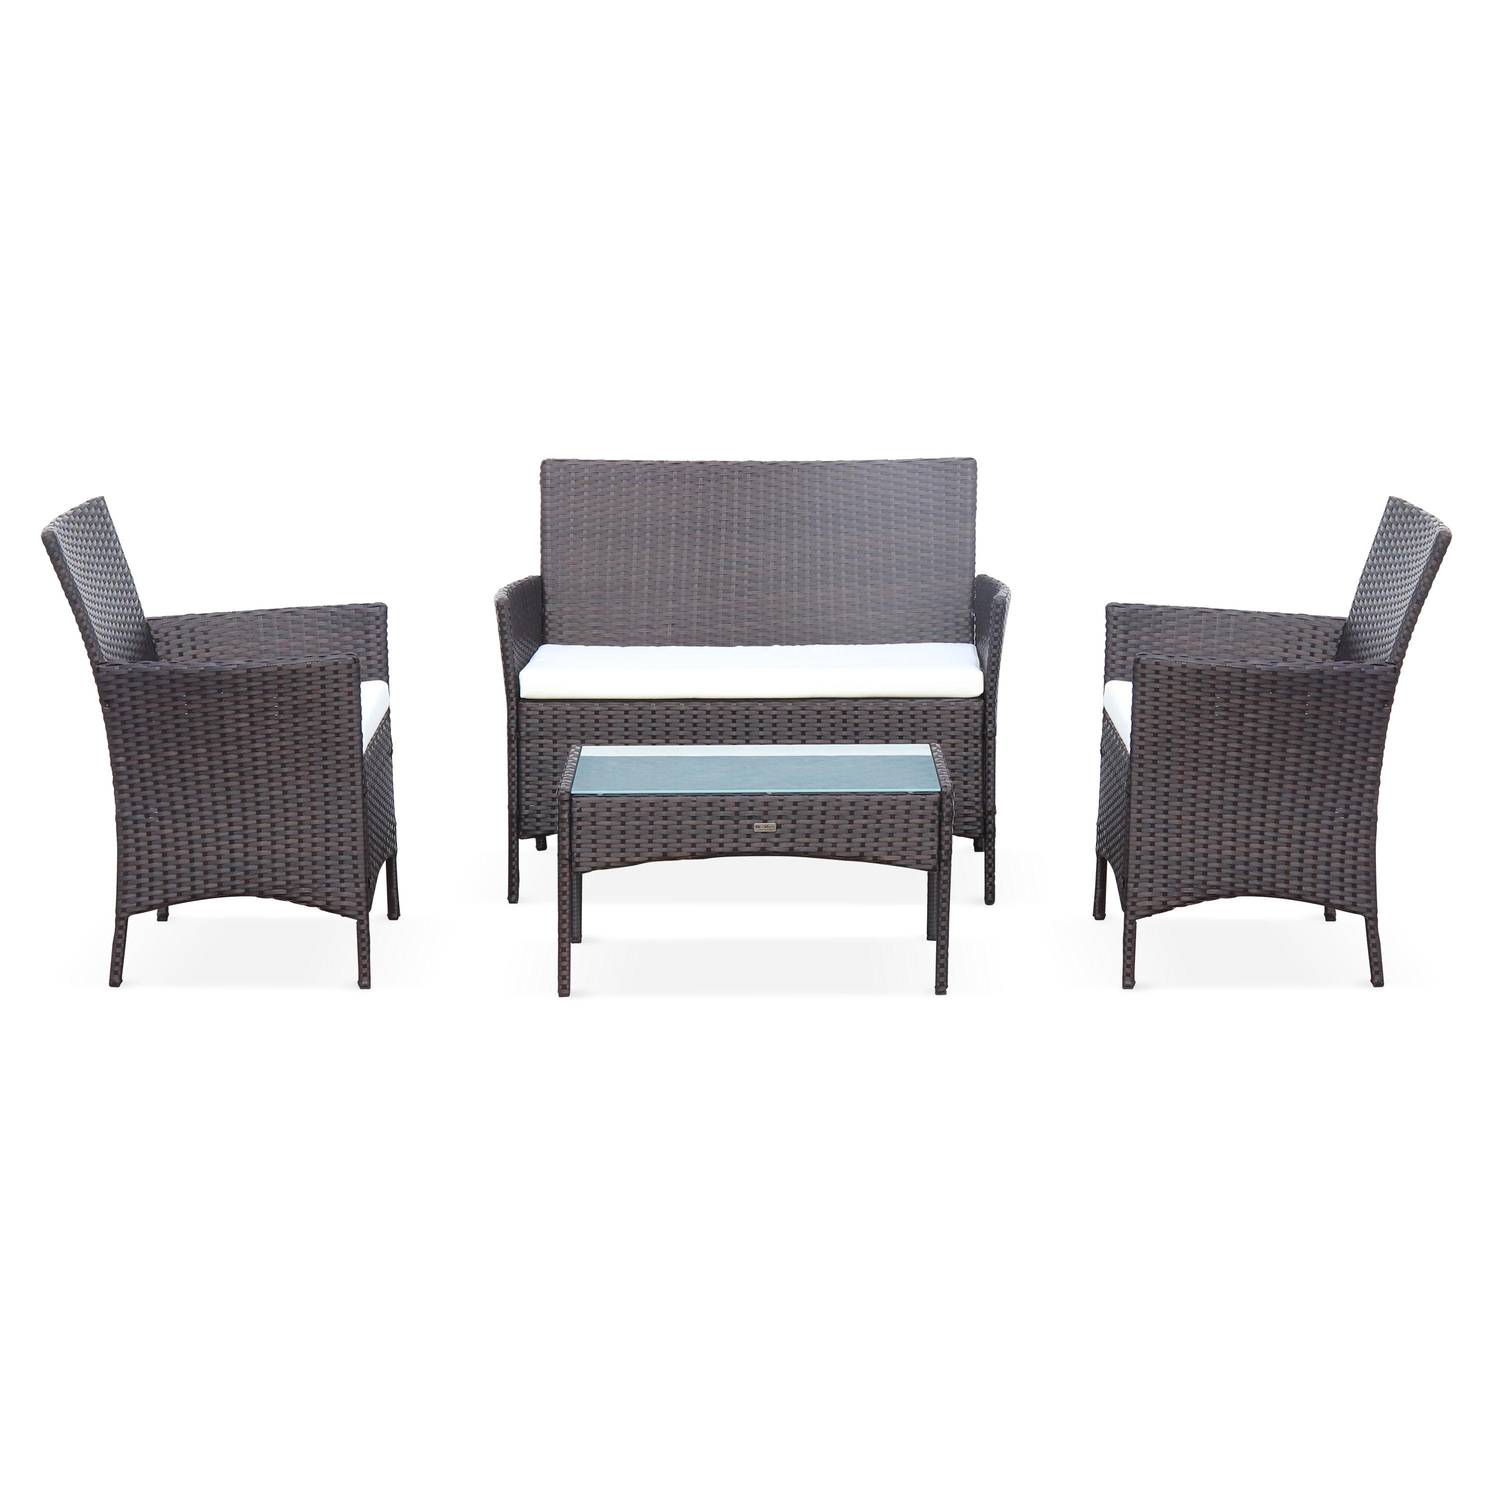 4-seater polyrattan garden sofa set - sofa, 2 armchairs, coffee table - Moltes - Brown rattan, Off-white cushions Photo3